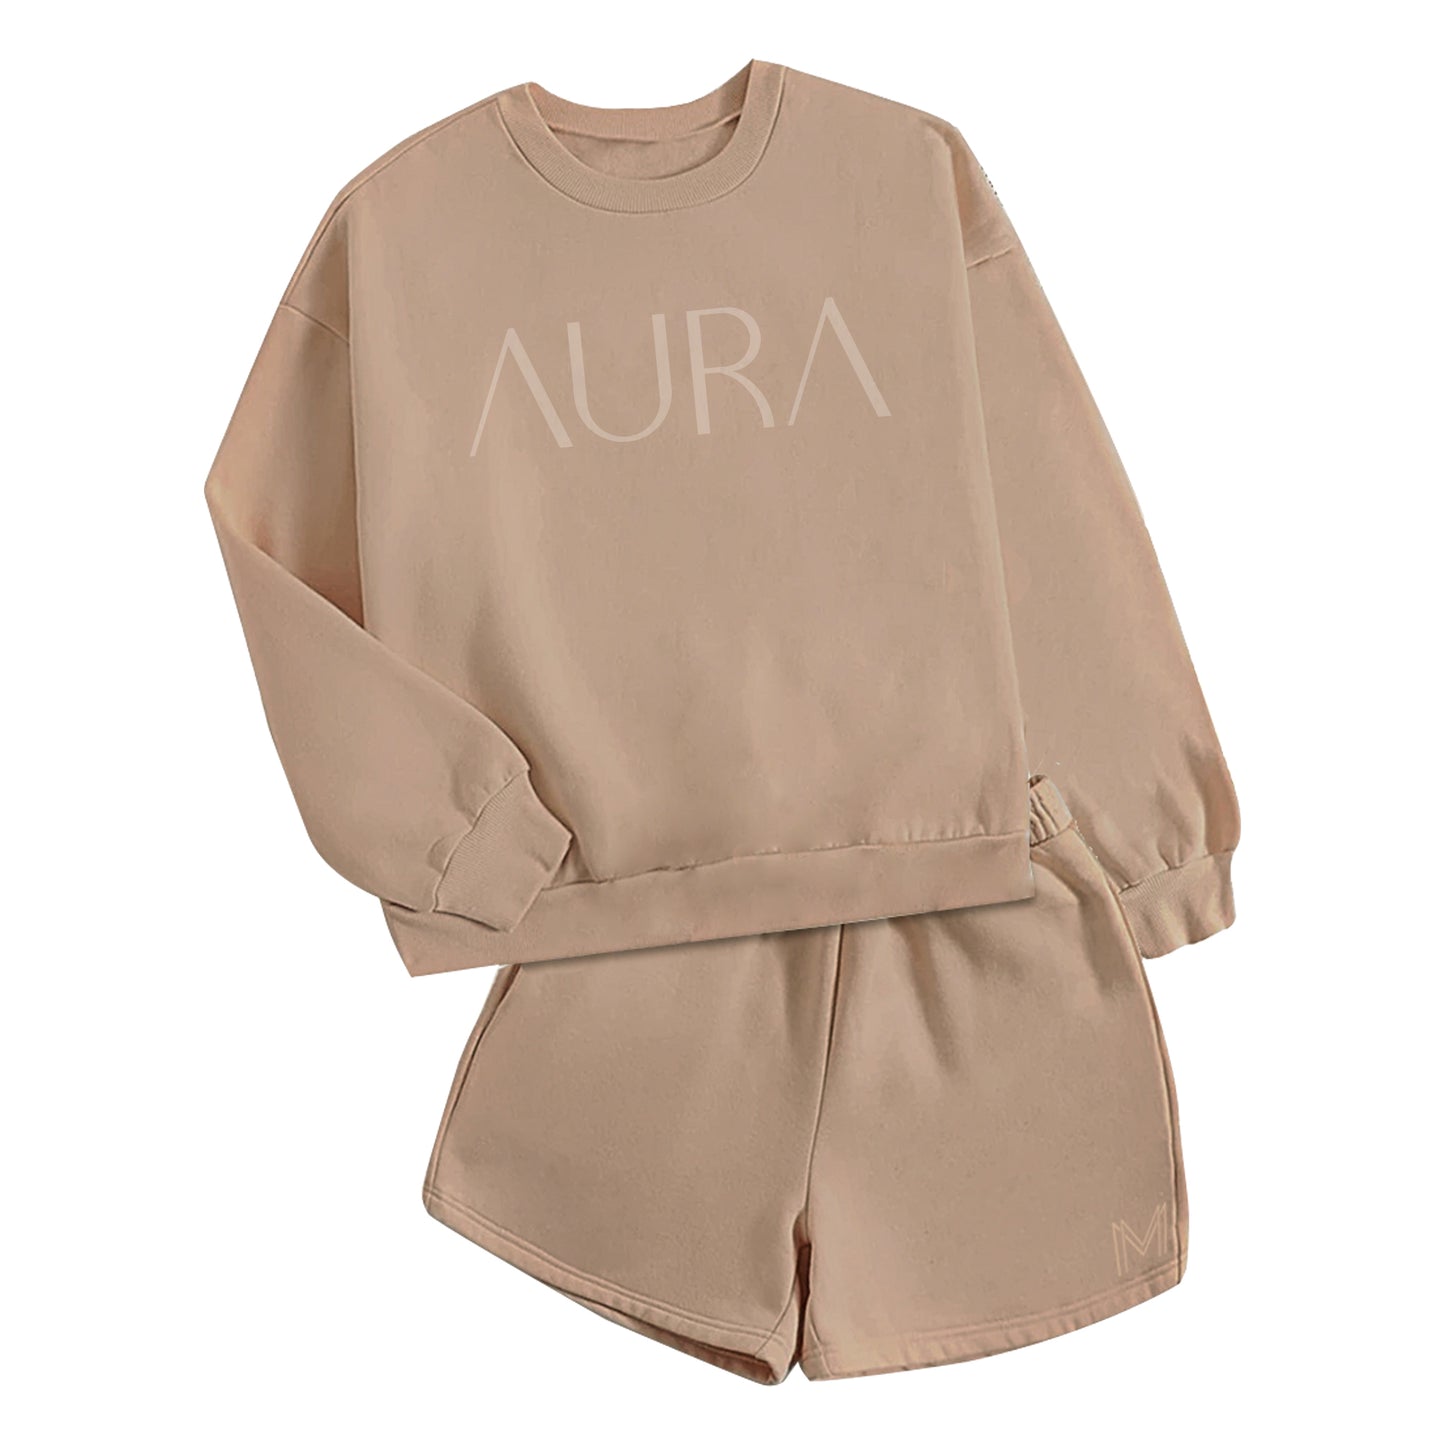 AURA Loungewear Set - Nude